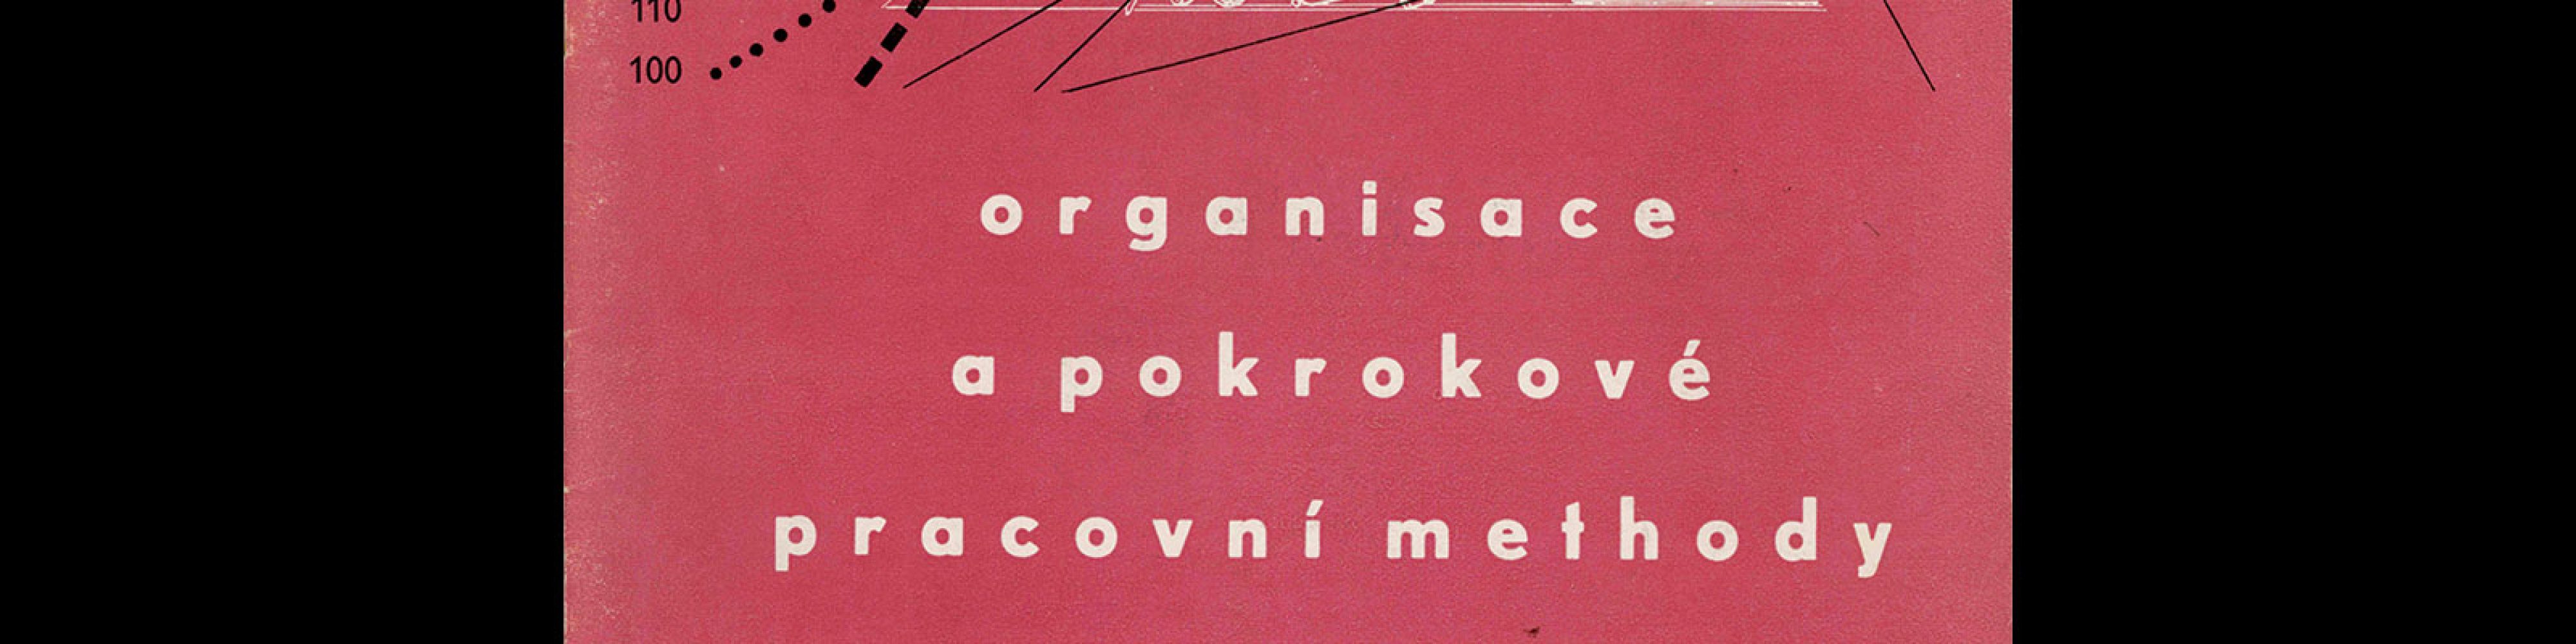 Typografia, ročník 56, 09, 1953. Cover design by Oldřich Hlavsa